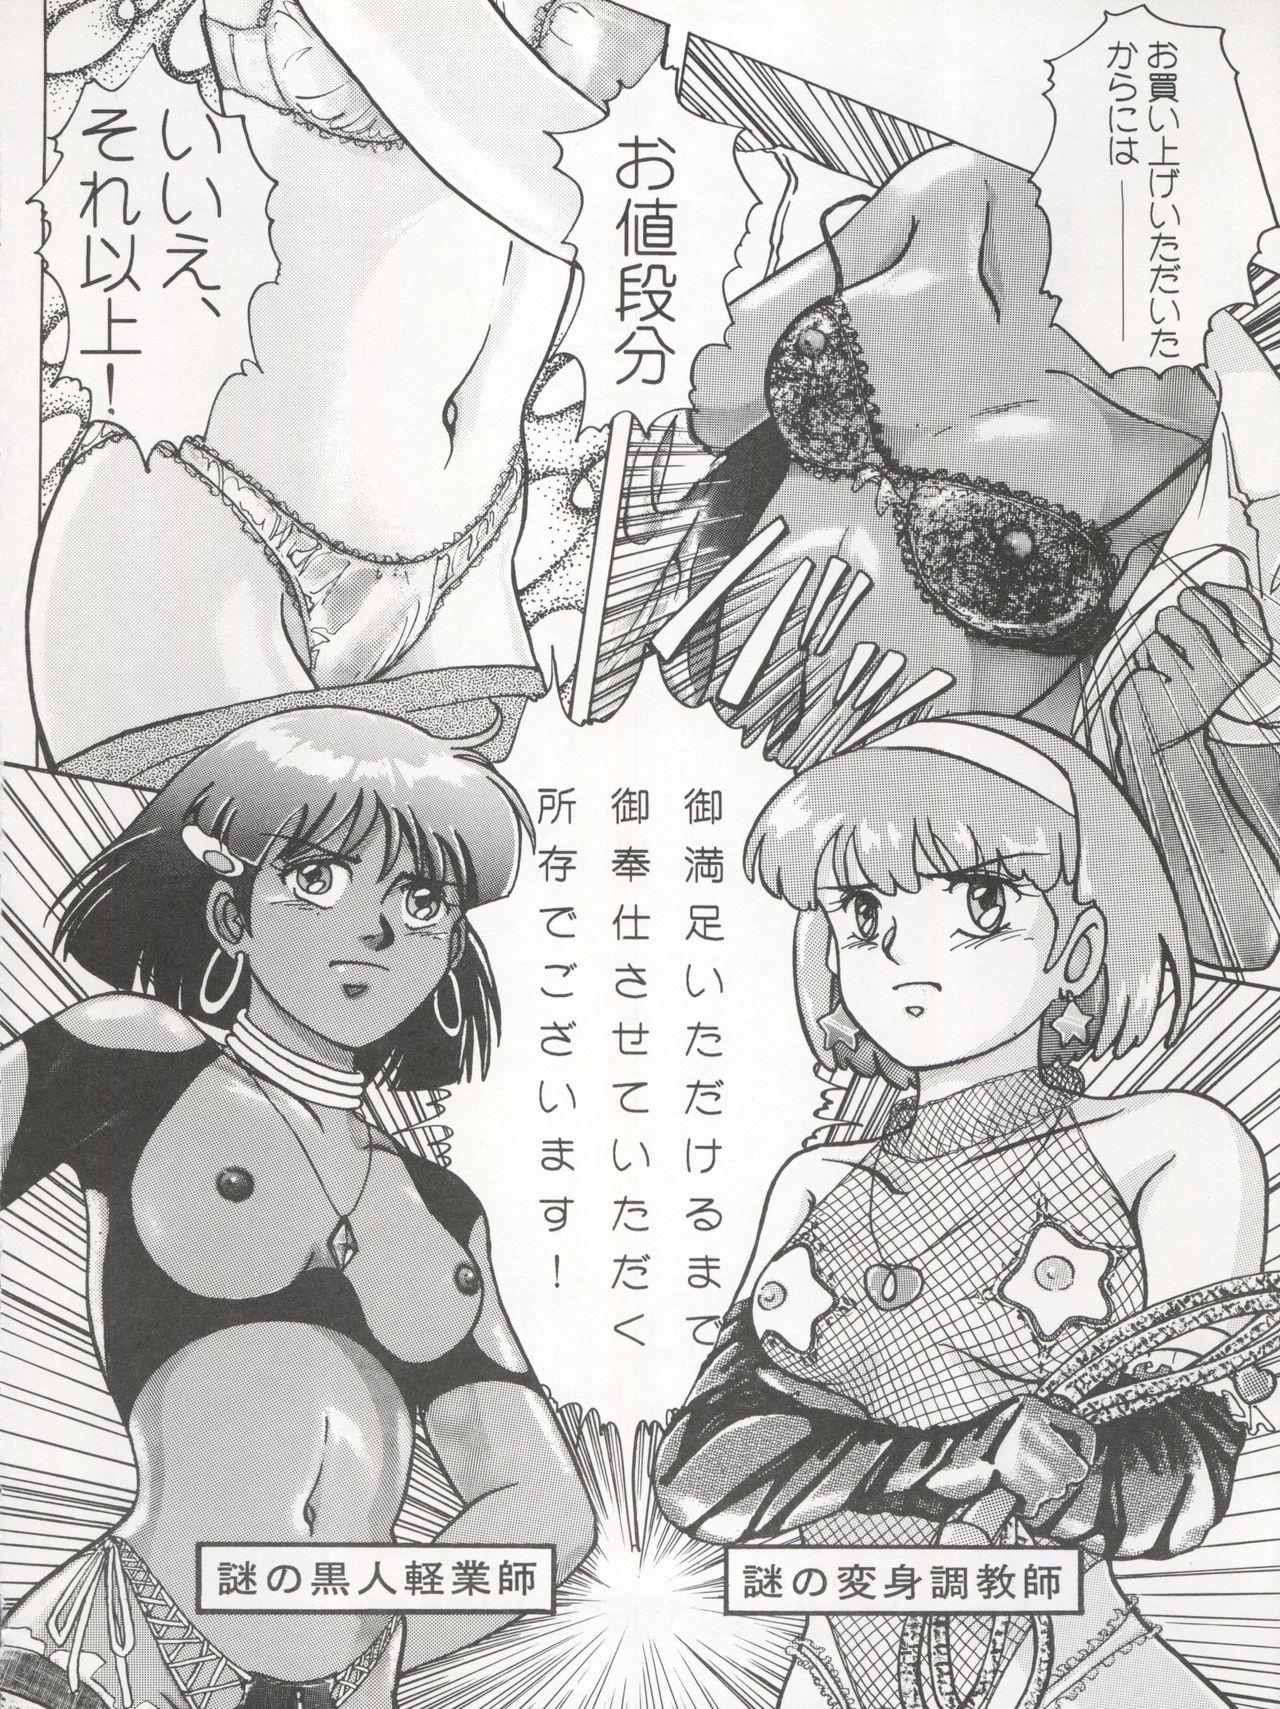 Old Young 逮捕されちゃうぞ - Fushigi no umi no nadia Youre under arrest Minky momo 3x3 eyes Hard - Page 4